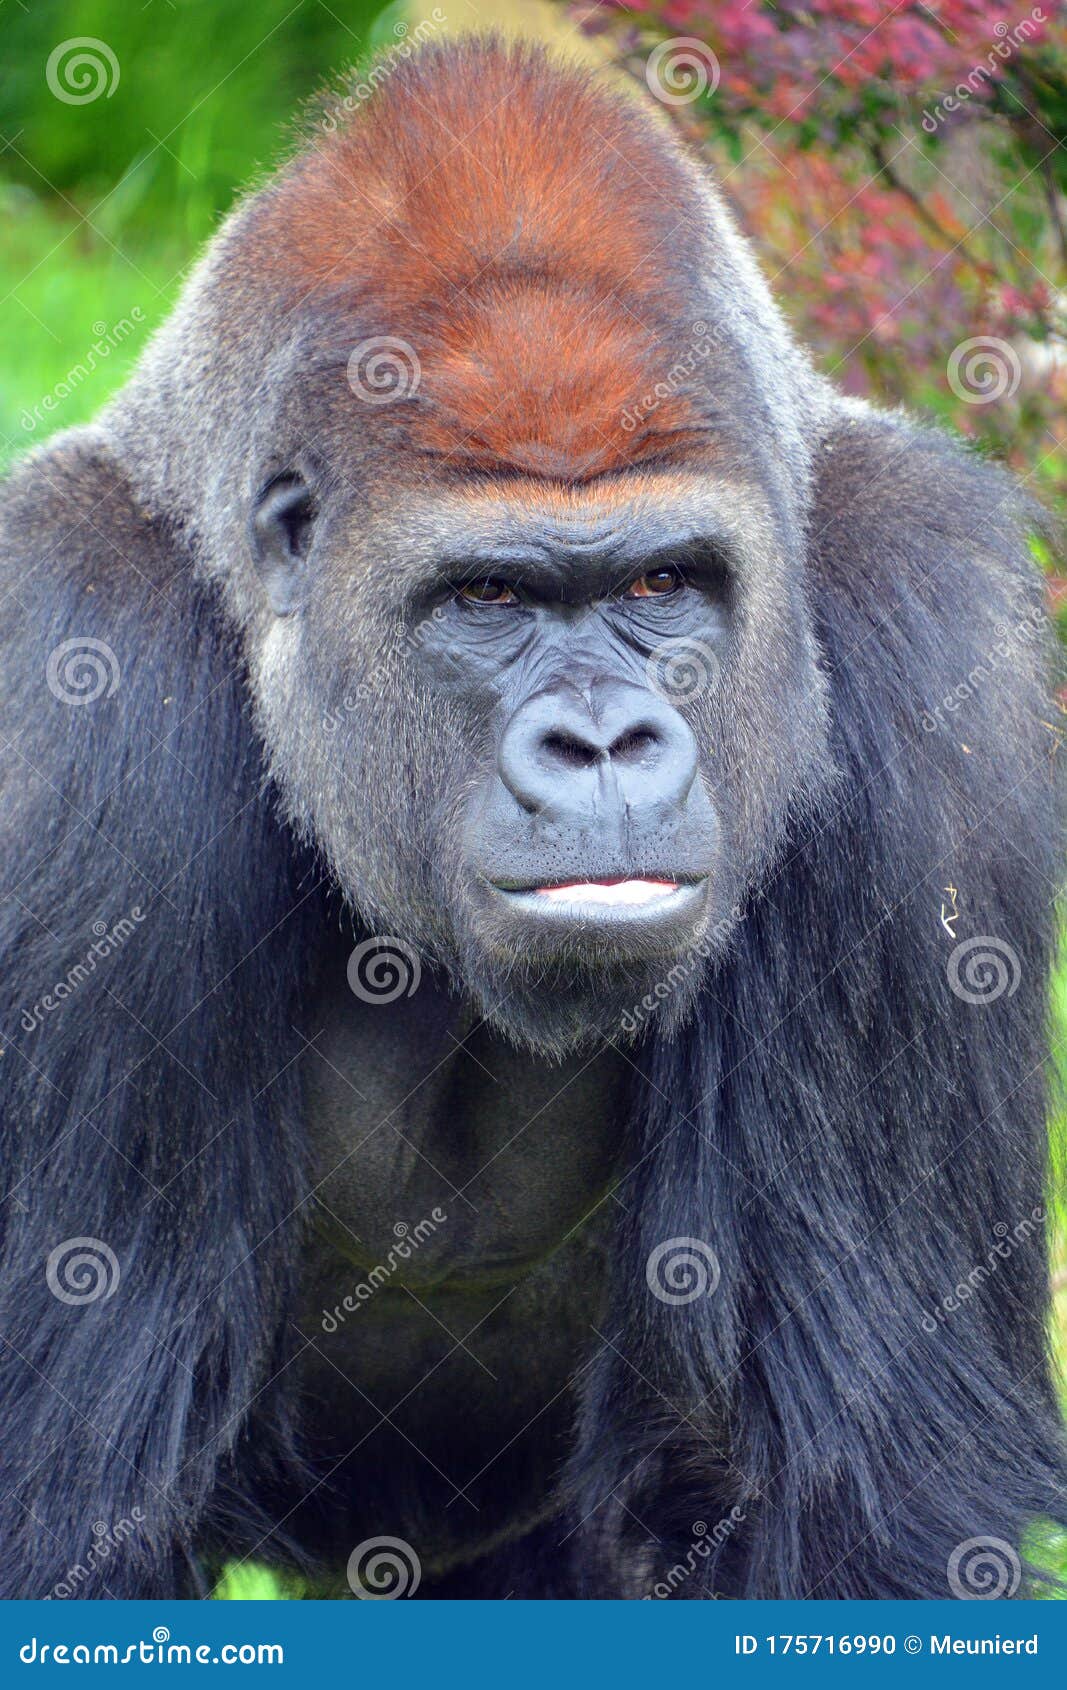 silver back gorillas are ground-dwelling, predominantly herbivorous apes